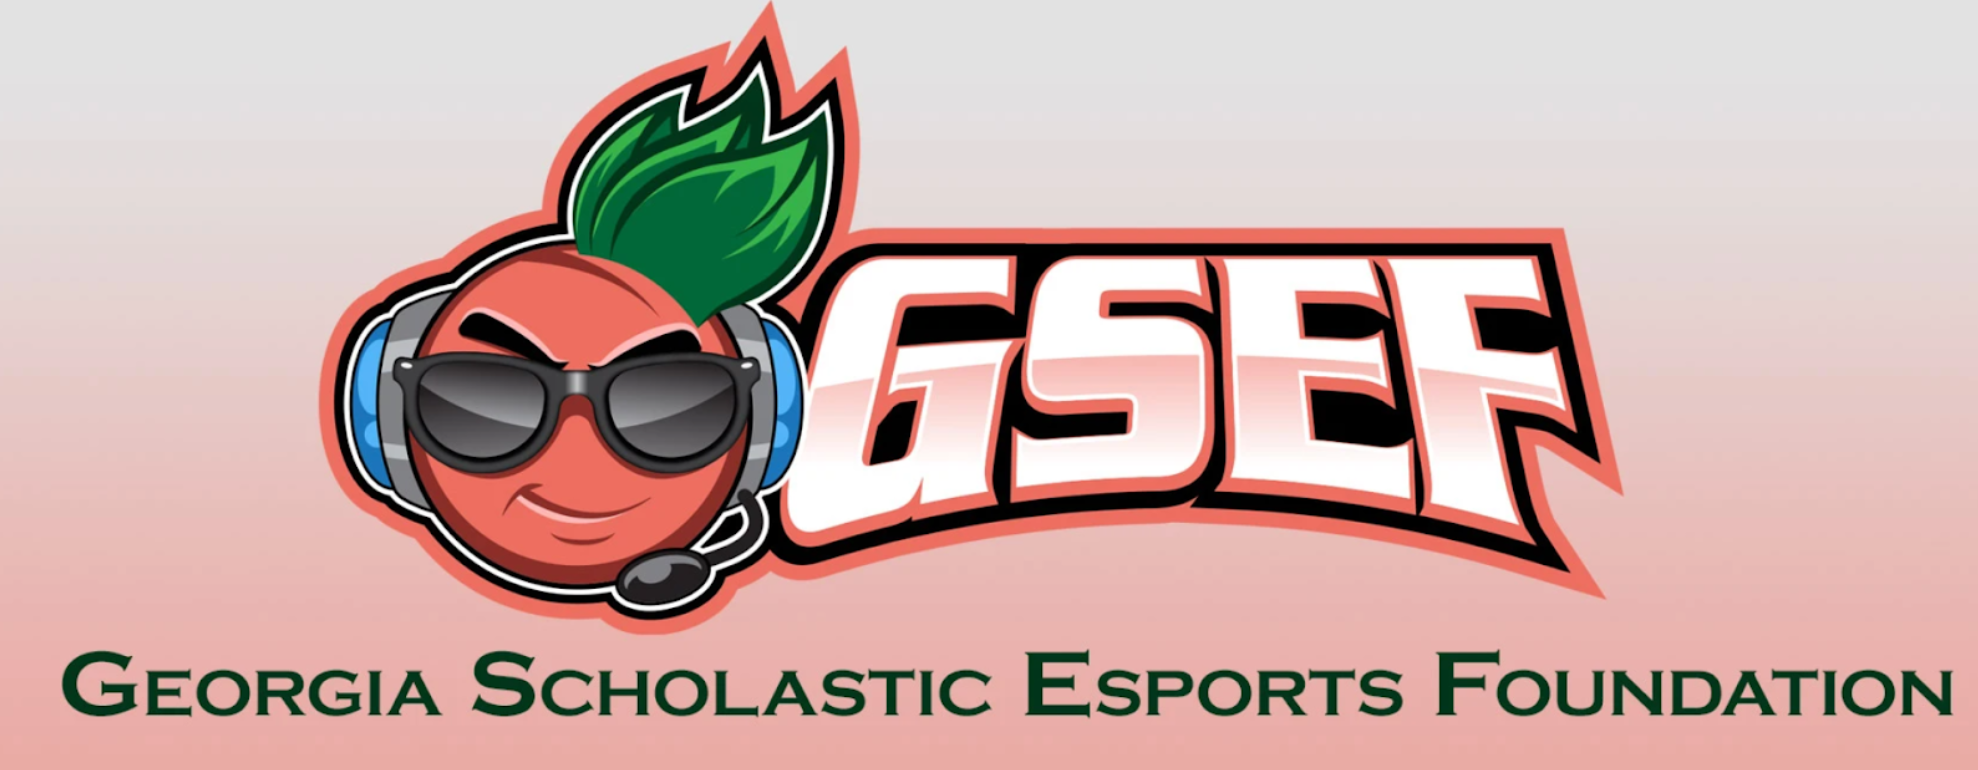 GSEF logo.png